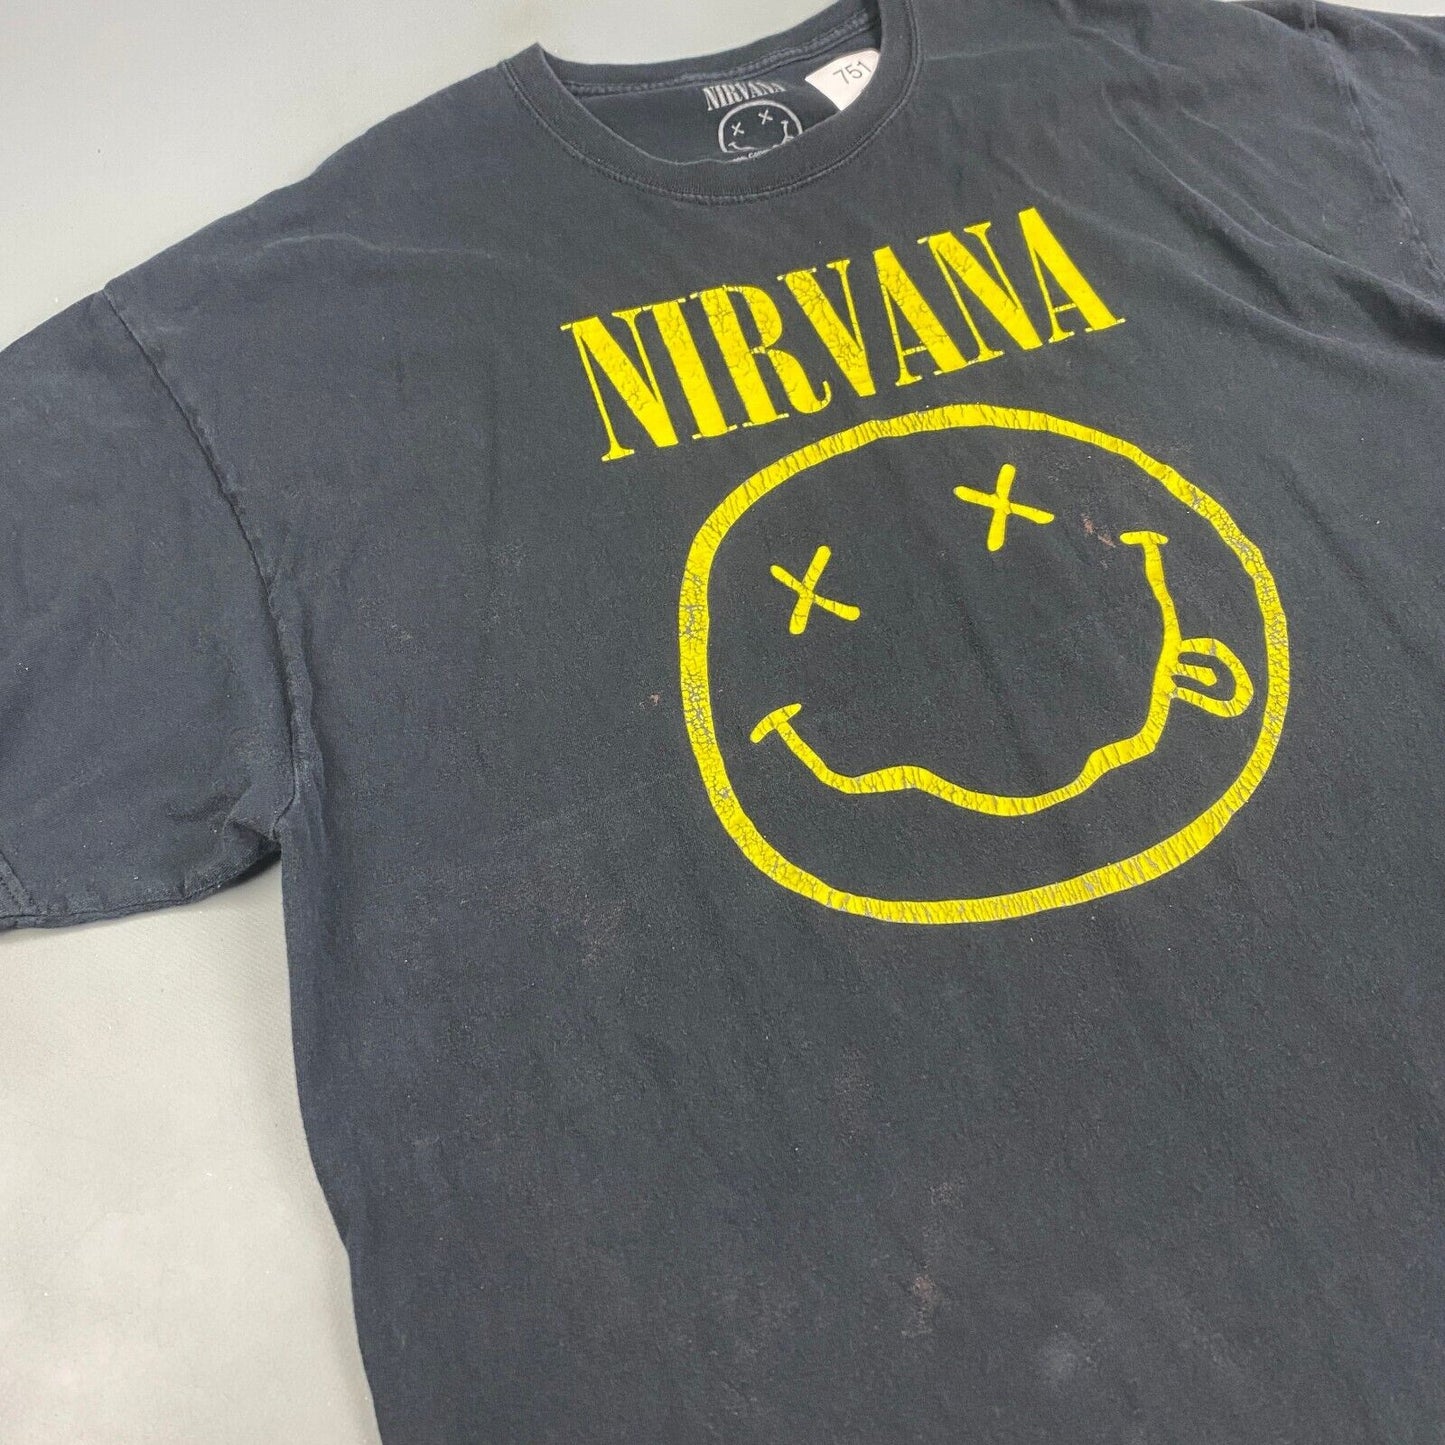 NIRVANA Smiley Face Big Graphic Black Band T-Shirt sz 3XL Men Adult